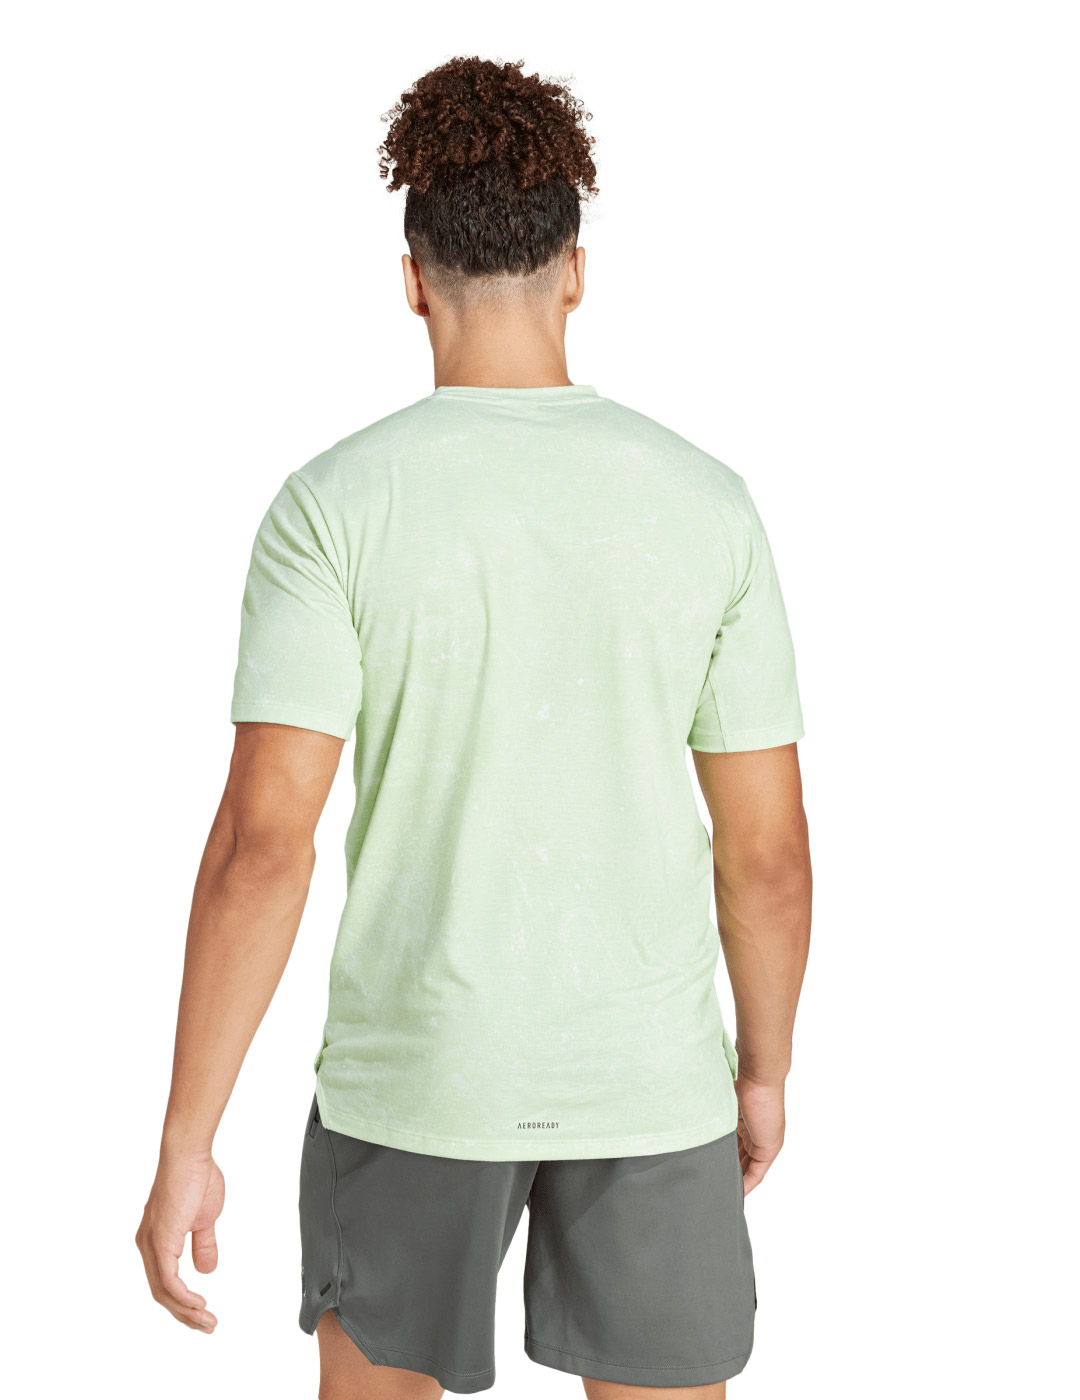 camiseta técnica adidas hombre trainning, verde